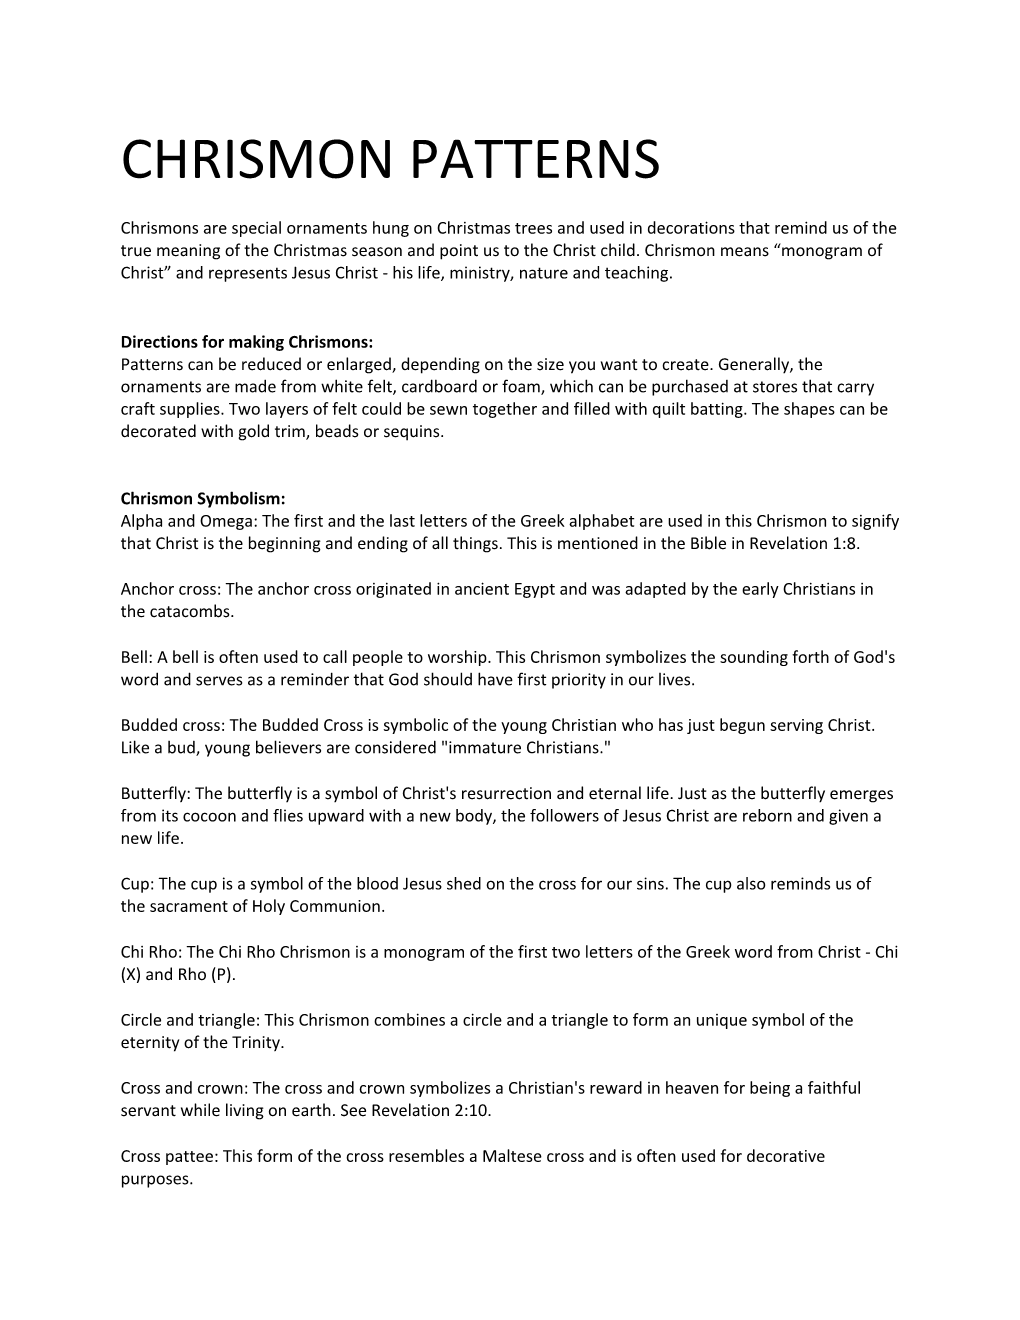 Chrismon Patterns